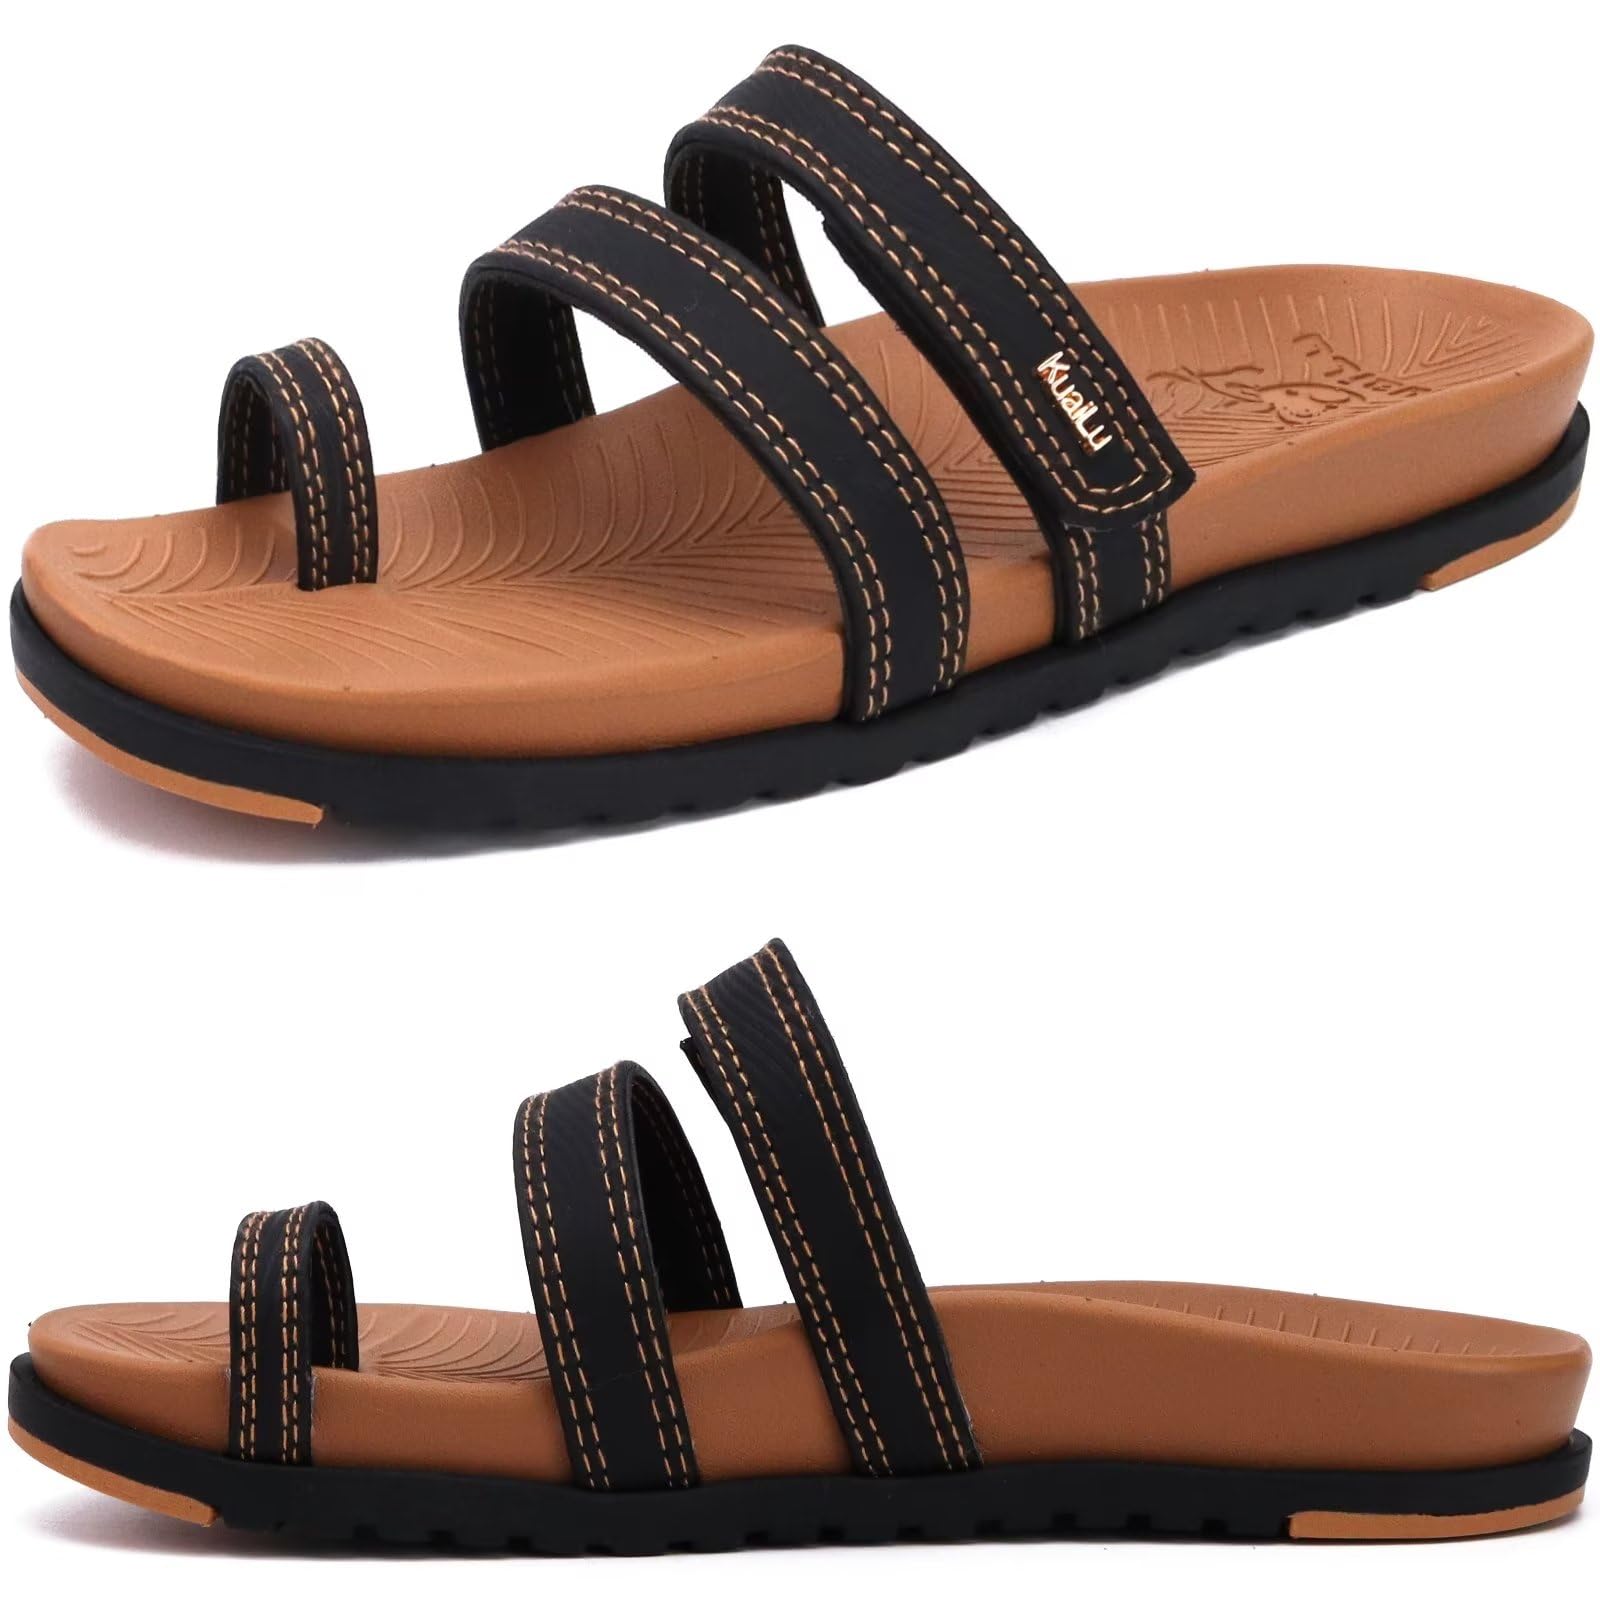 Buy KuaiLu Womens Slides Sandals with Plantar Fasciitis Arch Support  Fashion Comfort Adjustable Flat Sandals Ladies Lightweight Orthotic Slip on  Sandals